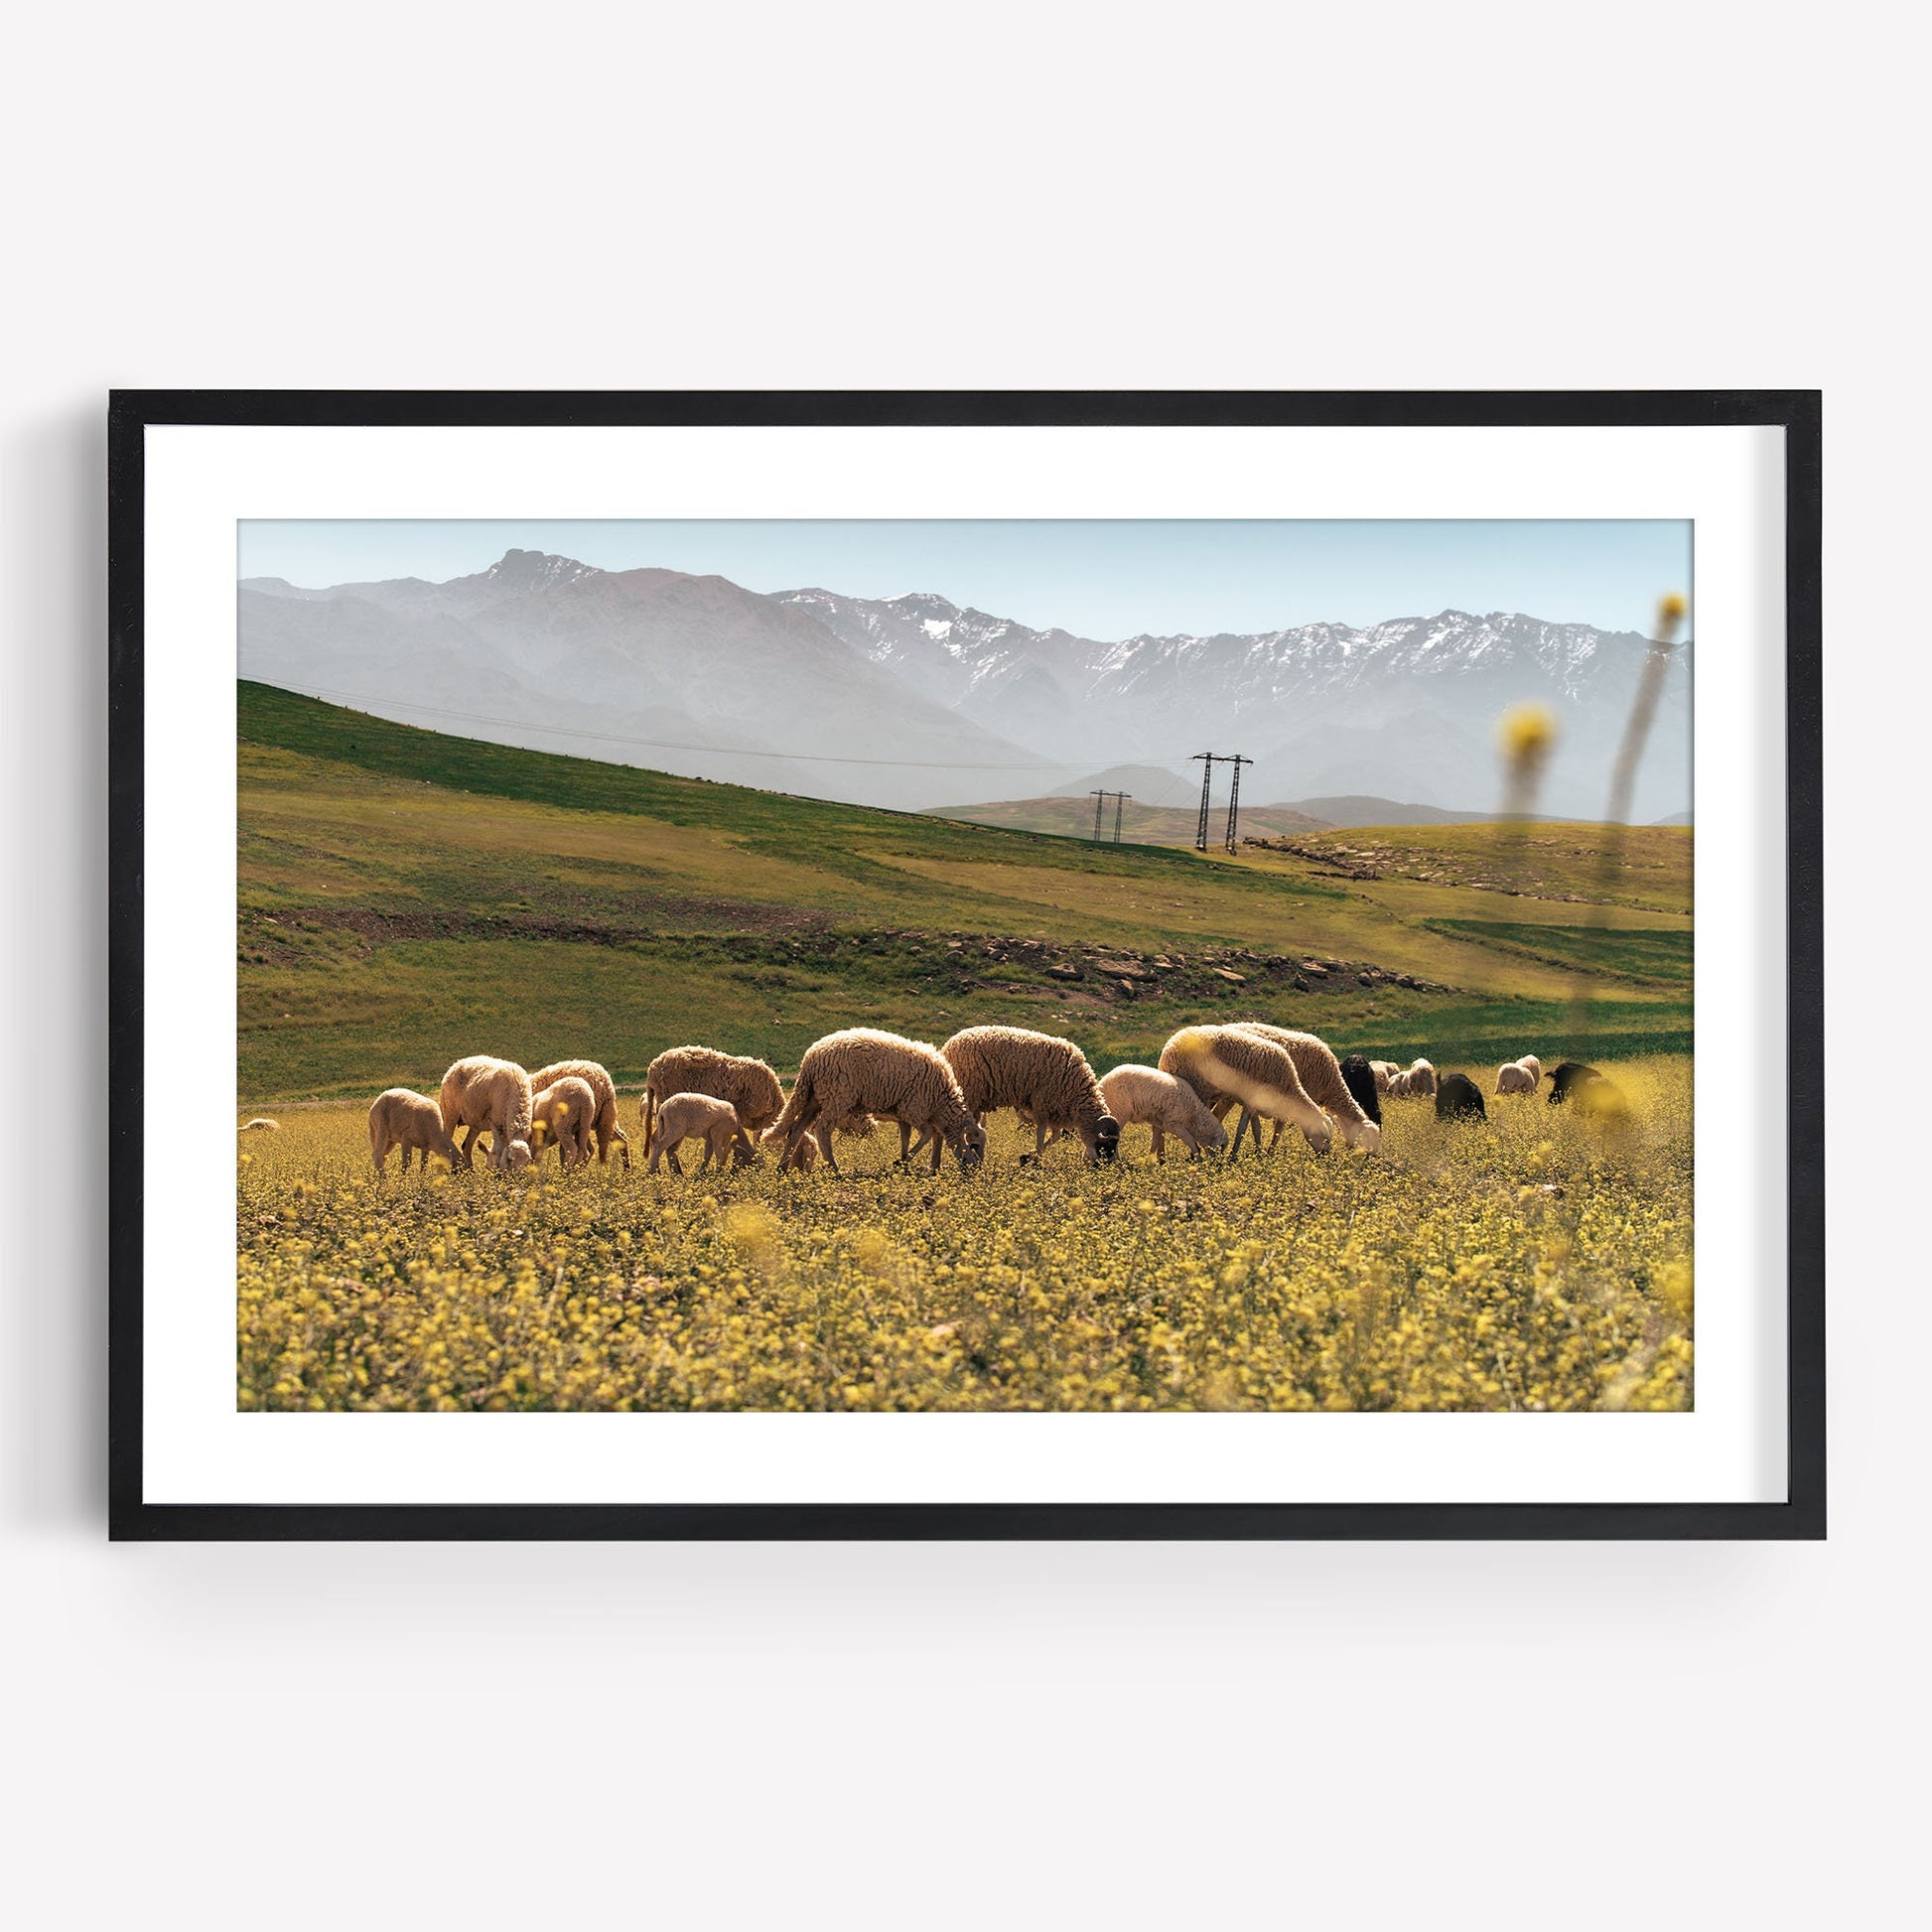 Morocco Atlas Mountains Fine Art Photography - Morocco Photography, Mountain Sheep Photography, Animal Photography, Landscape Wildlife Photo